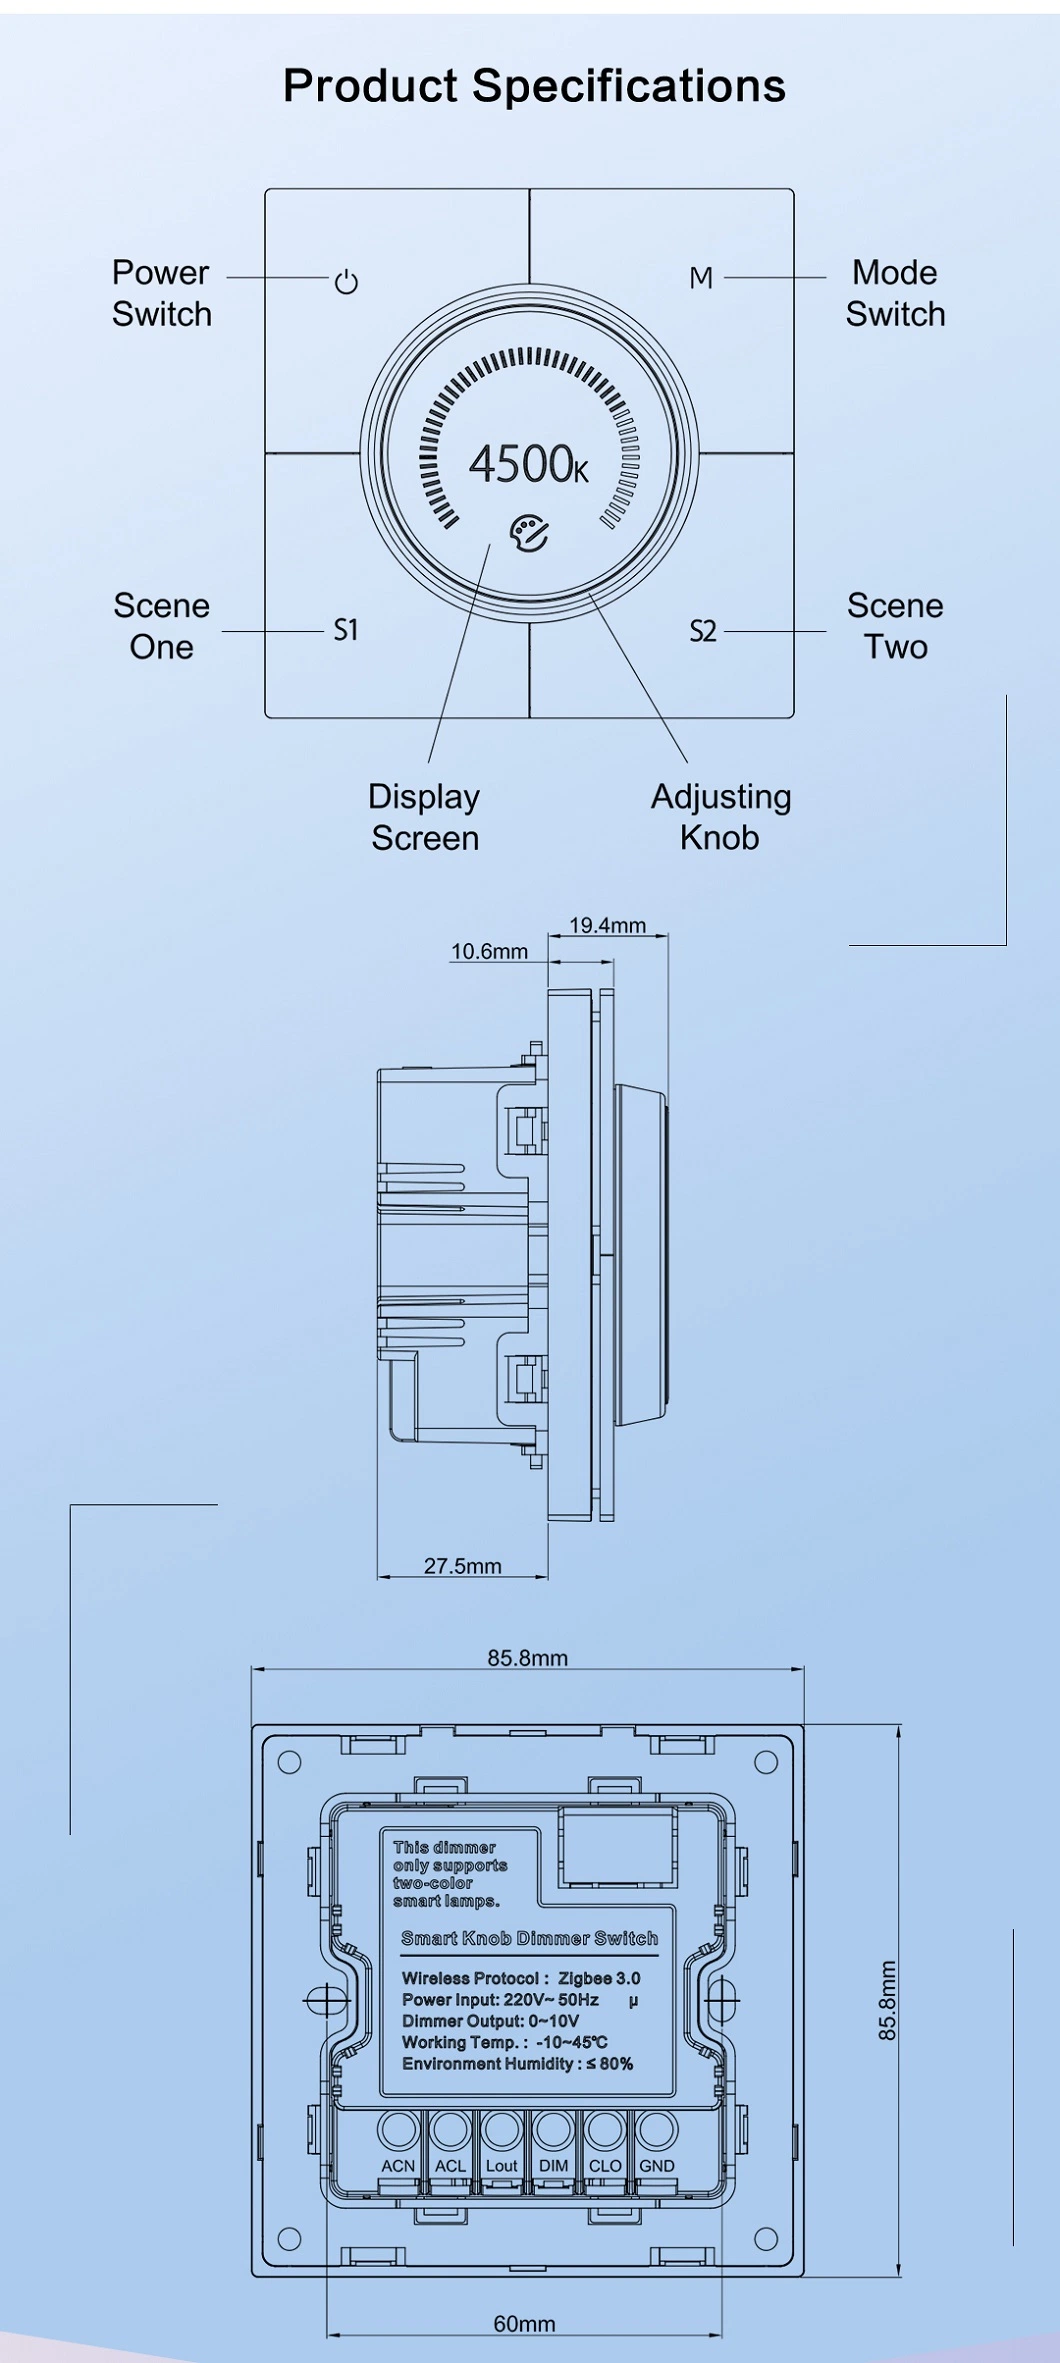 Artdna Zigbee Smart Dimmer Touch Knob Switch